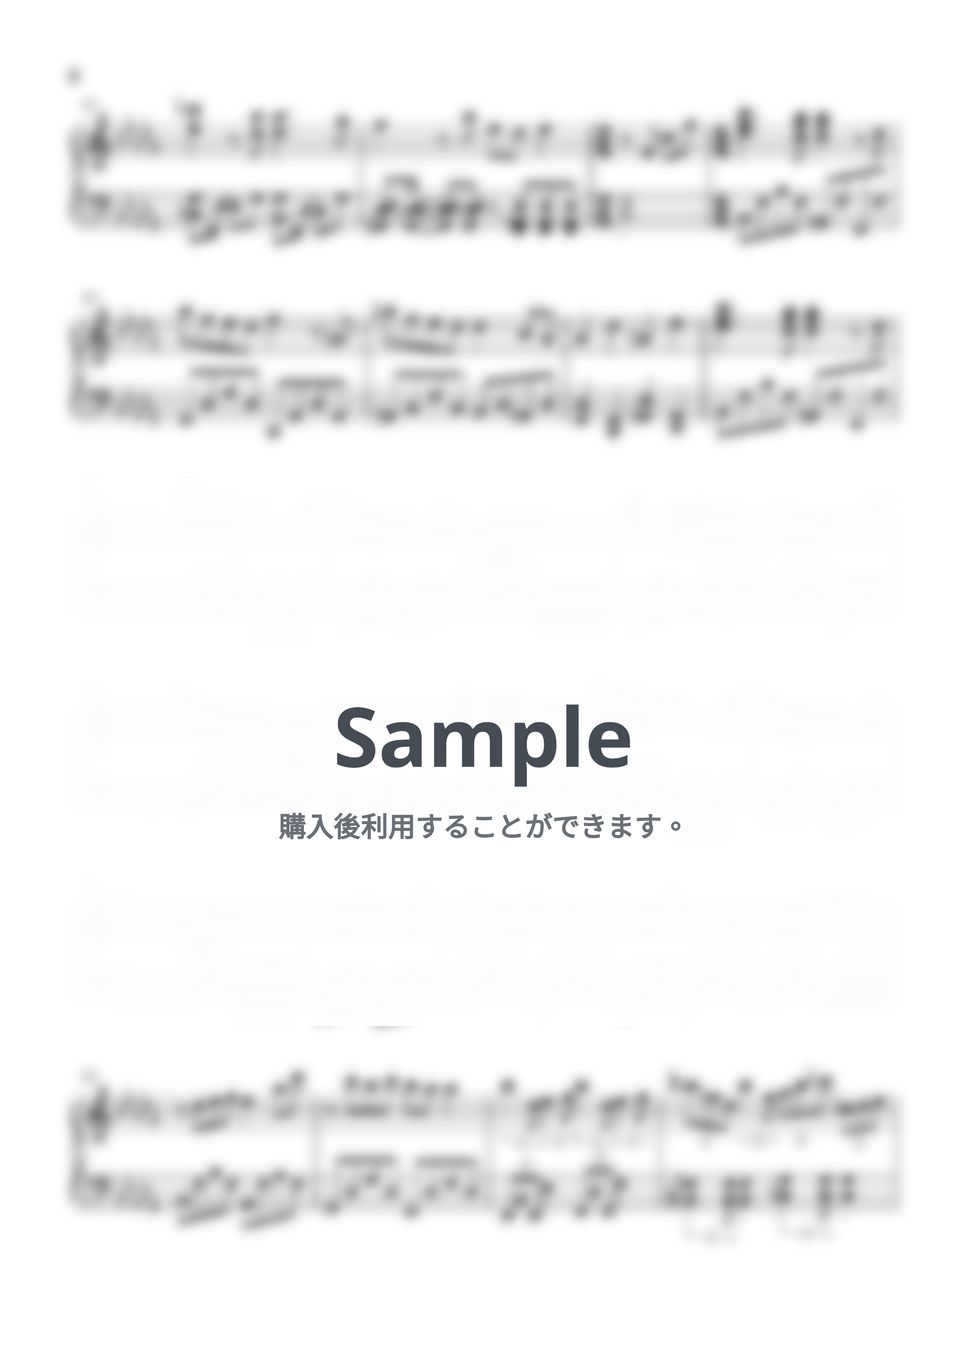 Mrs. GREEN APPLE - 延々 (intermediate, piano) by Mopianic